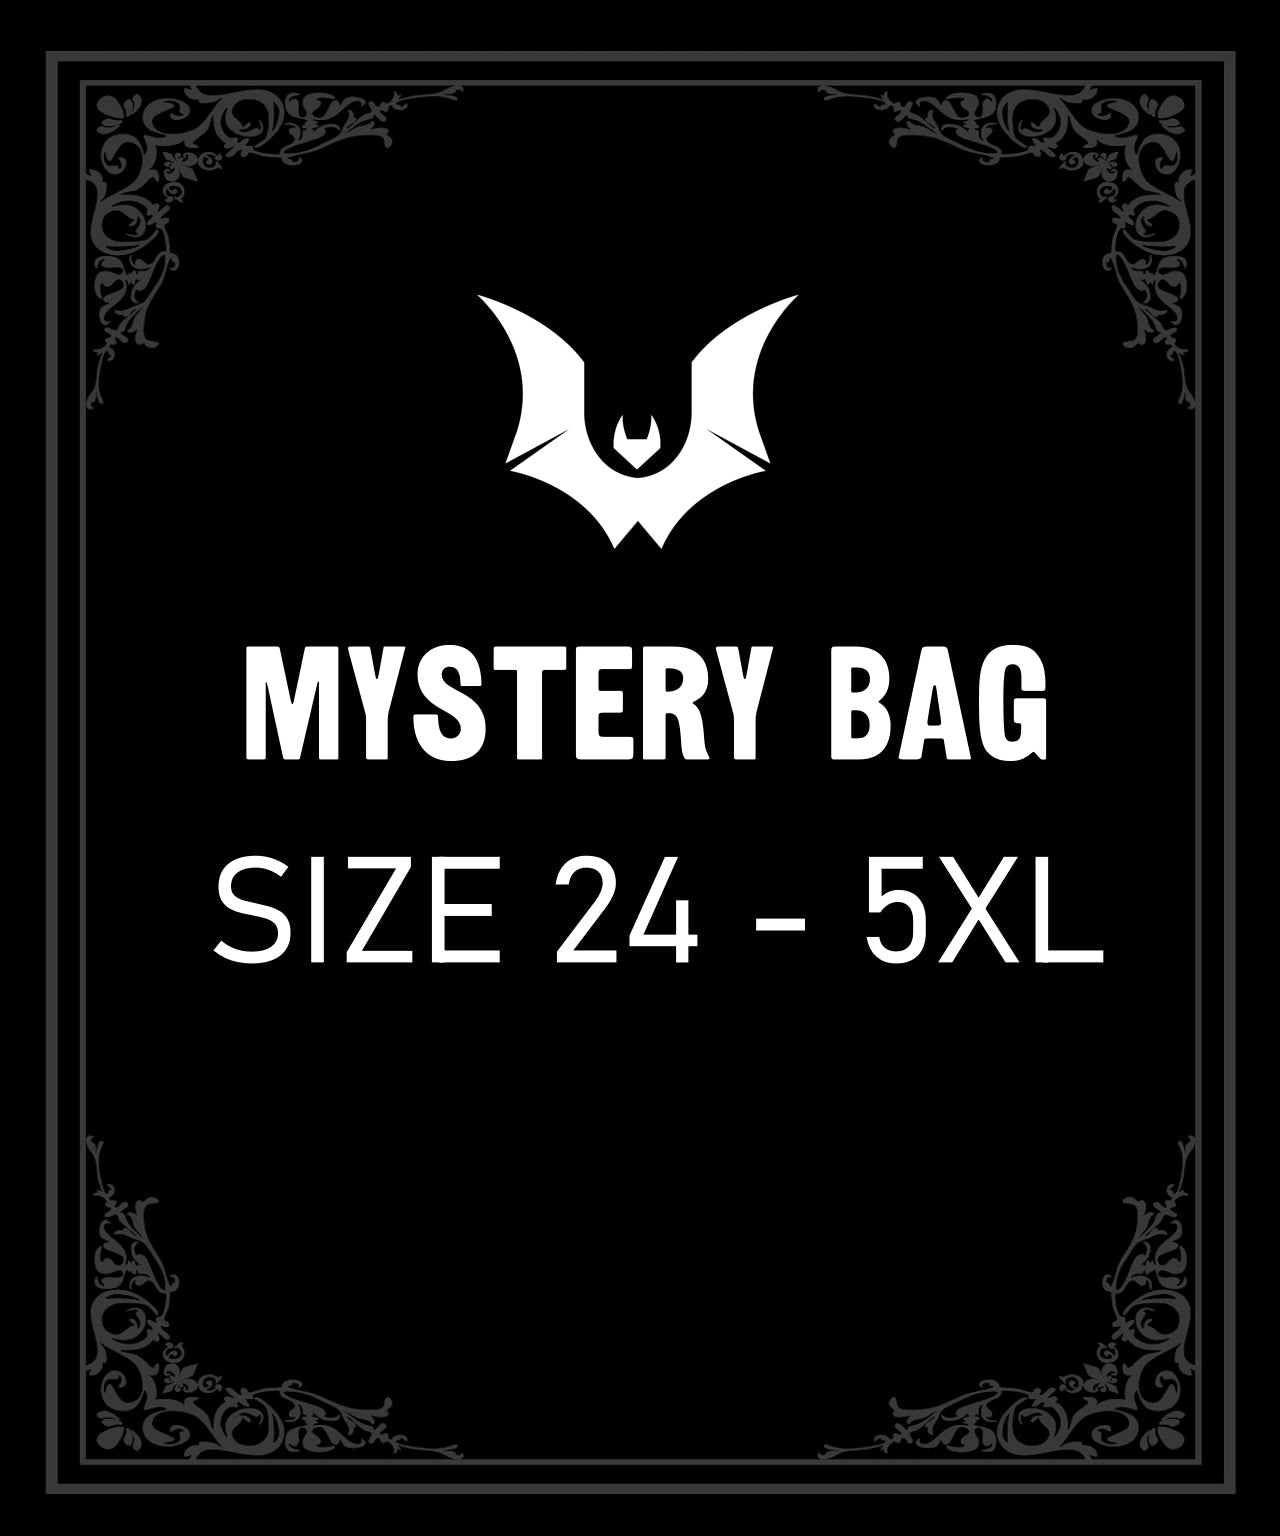 5XL Mystery Bag